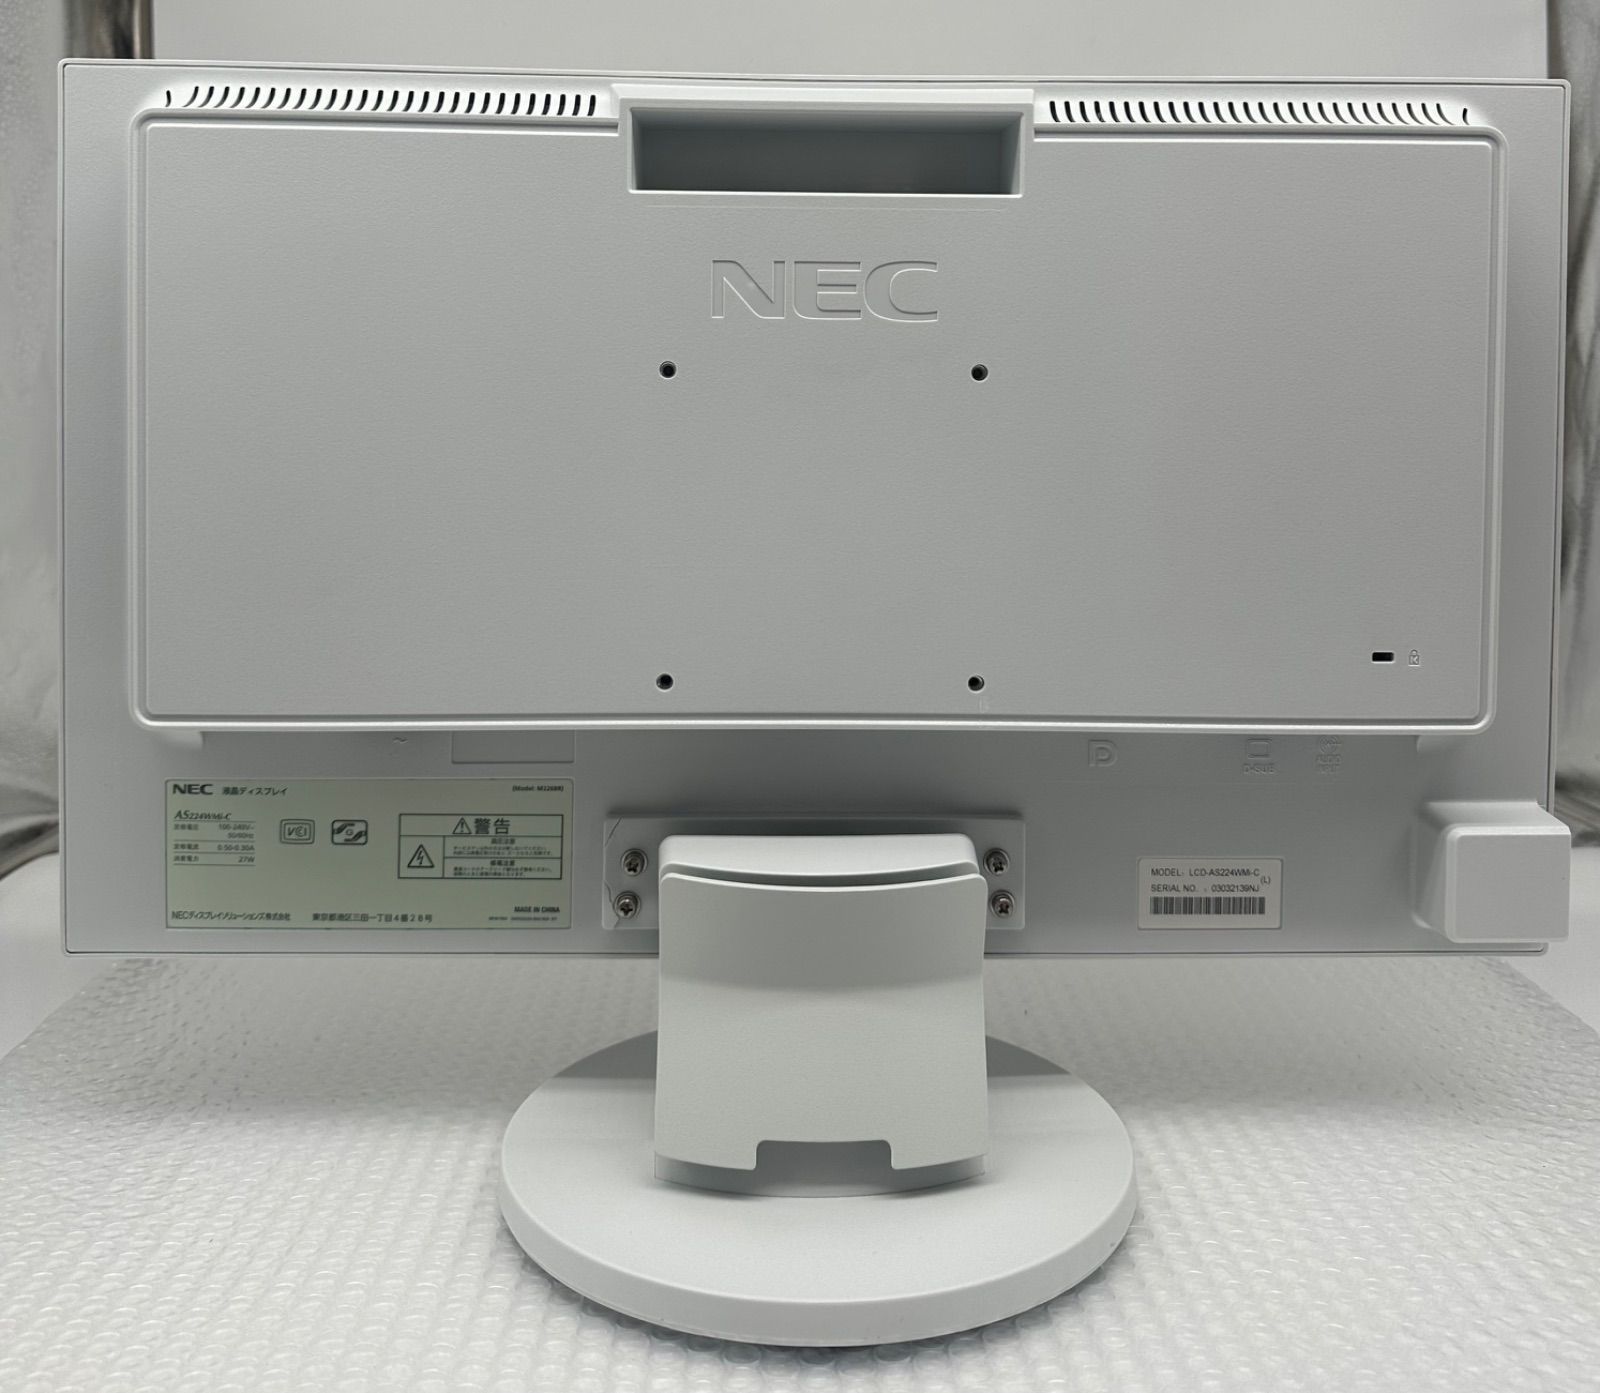 NEC LCD-AS224WMi-C IPSパネル搭載21.5型LEDモニター 1920 x 1080 Full HD （1080p）ステレオスピーカ内蔵 - ホワイト  中古ーとても良い